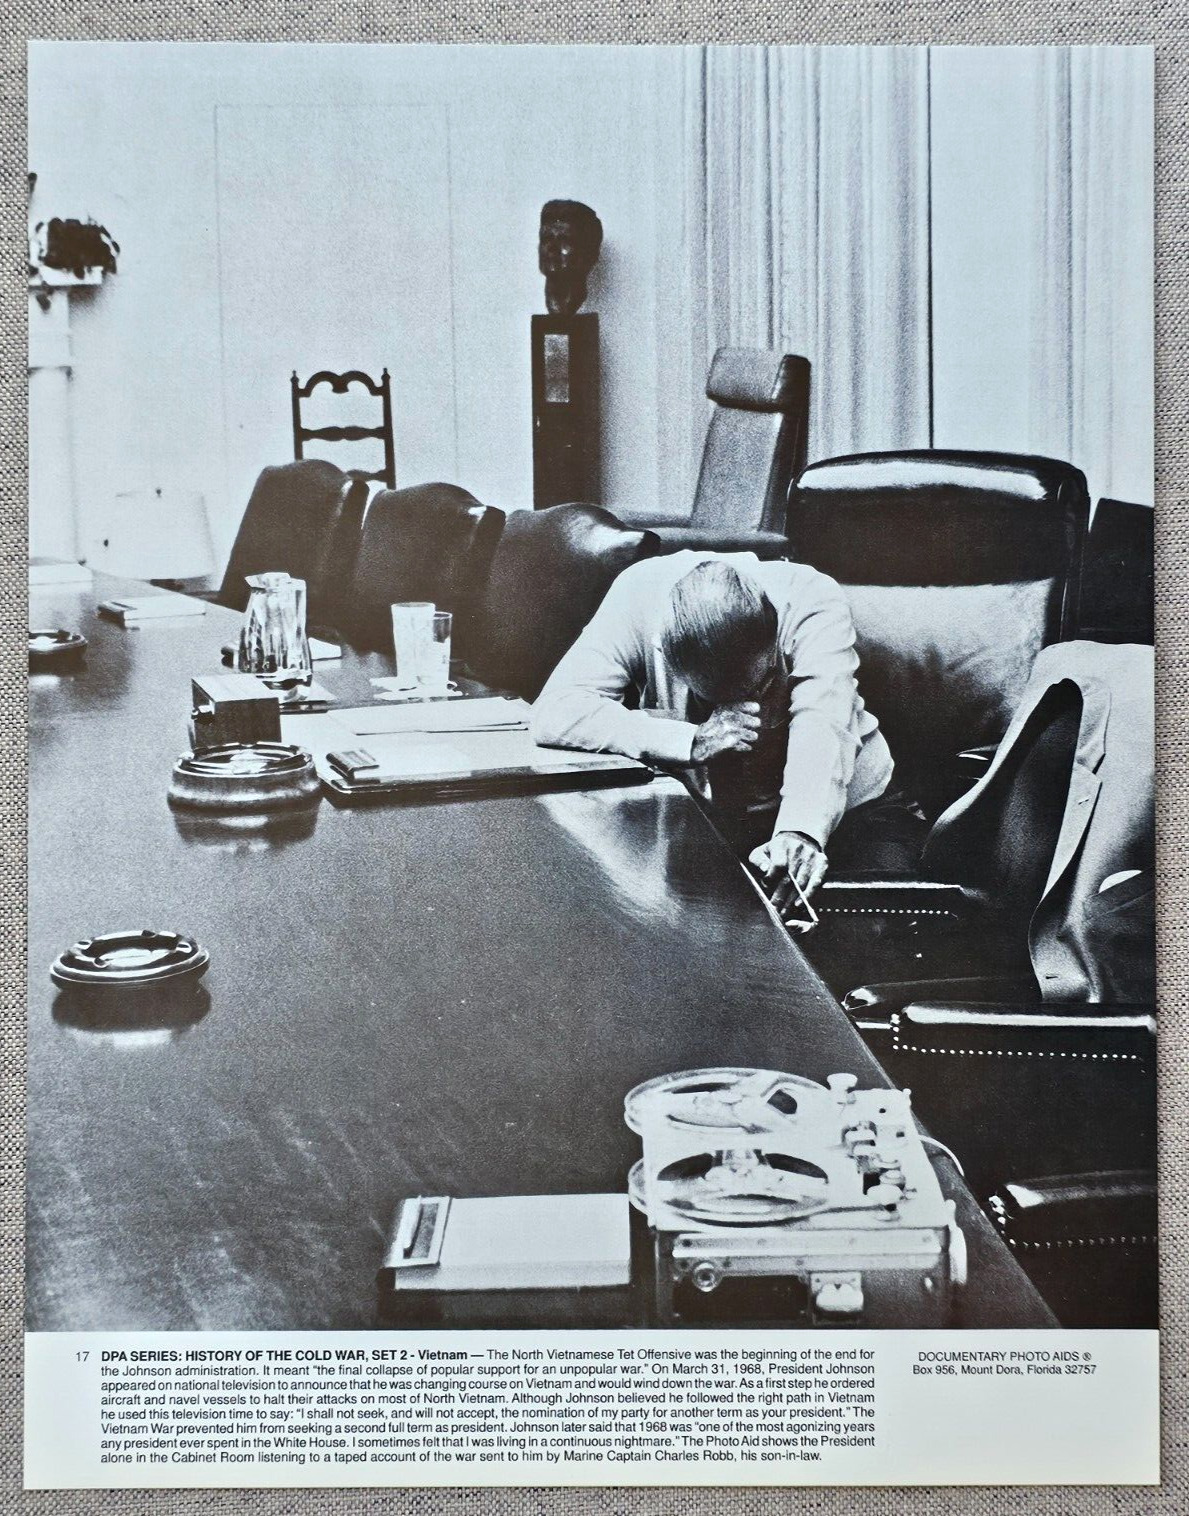 11x14 PHOTO PRESIDENT LYNDON B JOHNSON LISTENING TO TAPED ACCOUNT OF VIETNAM WAR